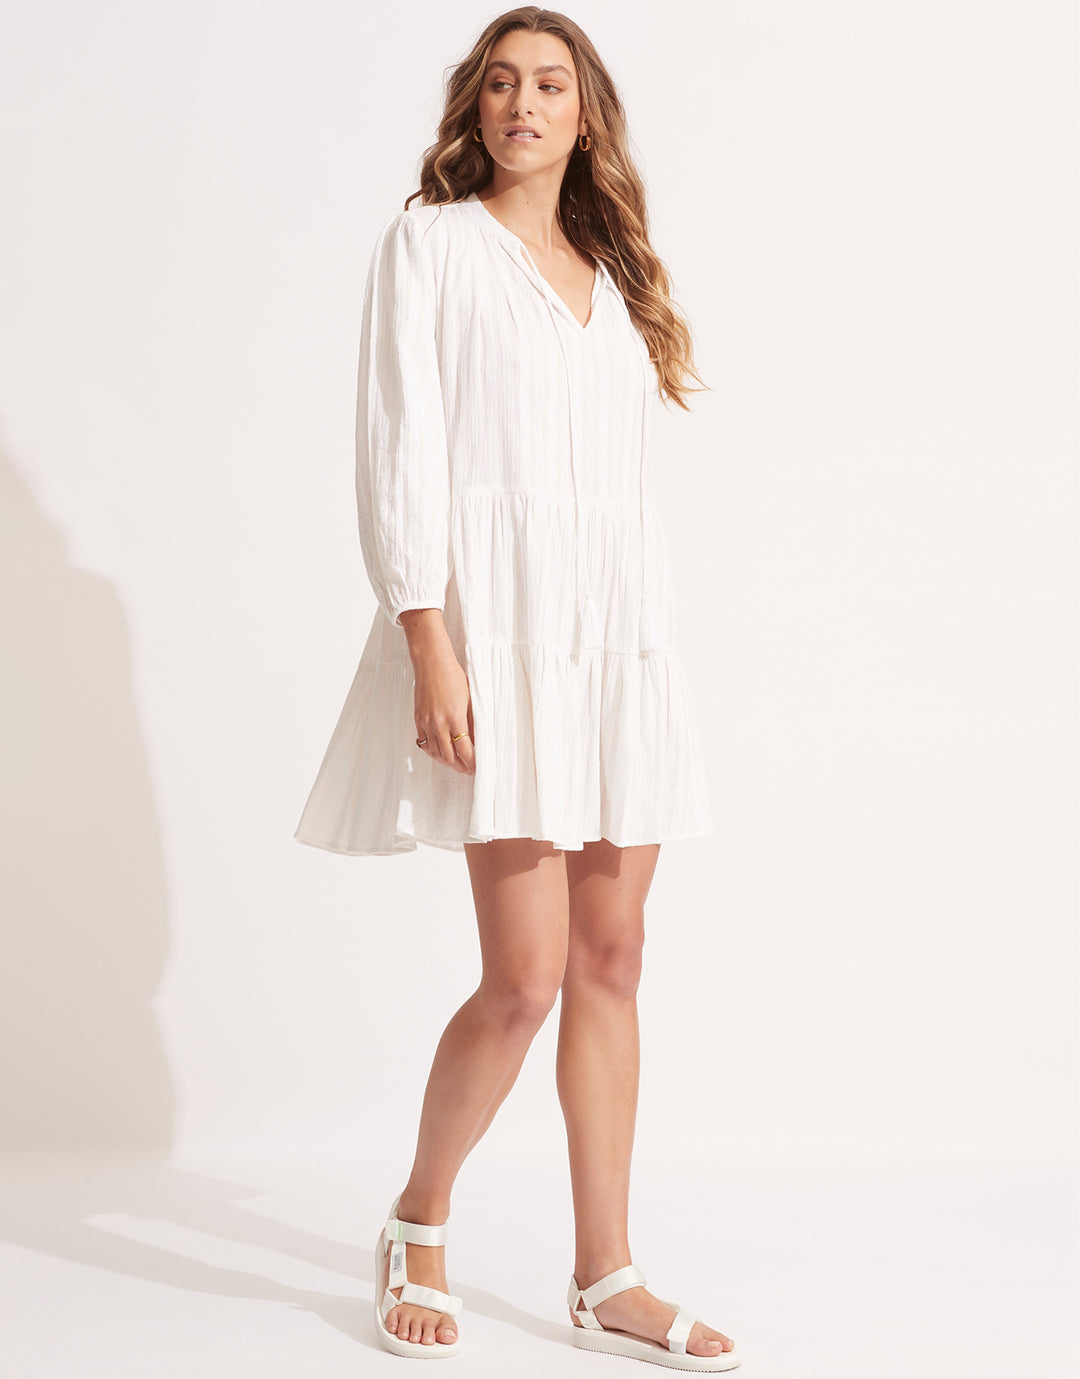 Market Tier Dress - White - Simply Beach UK